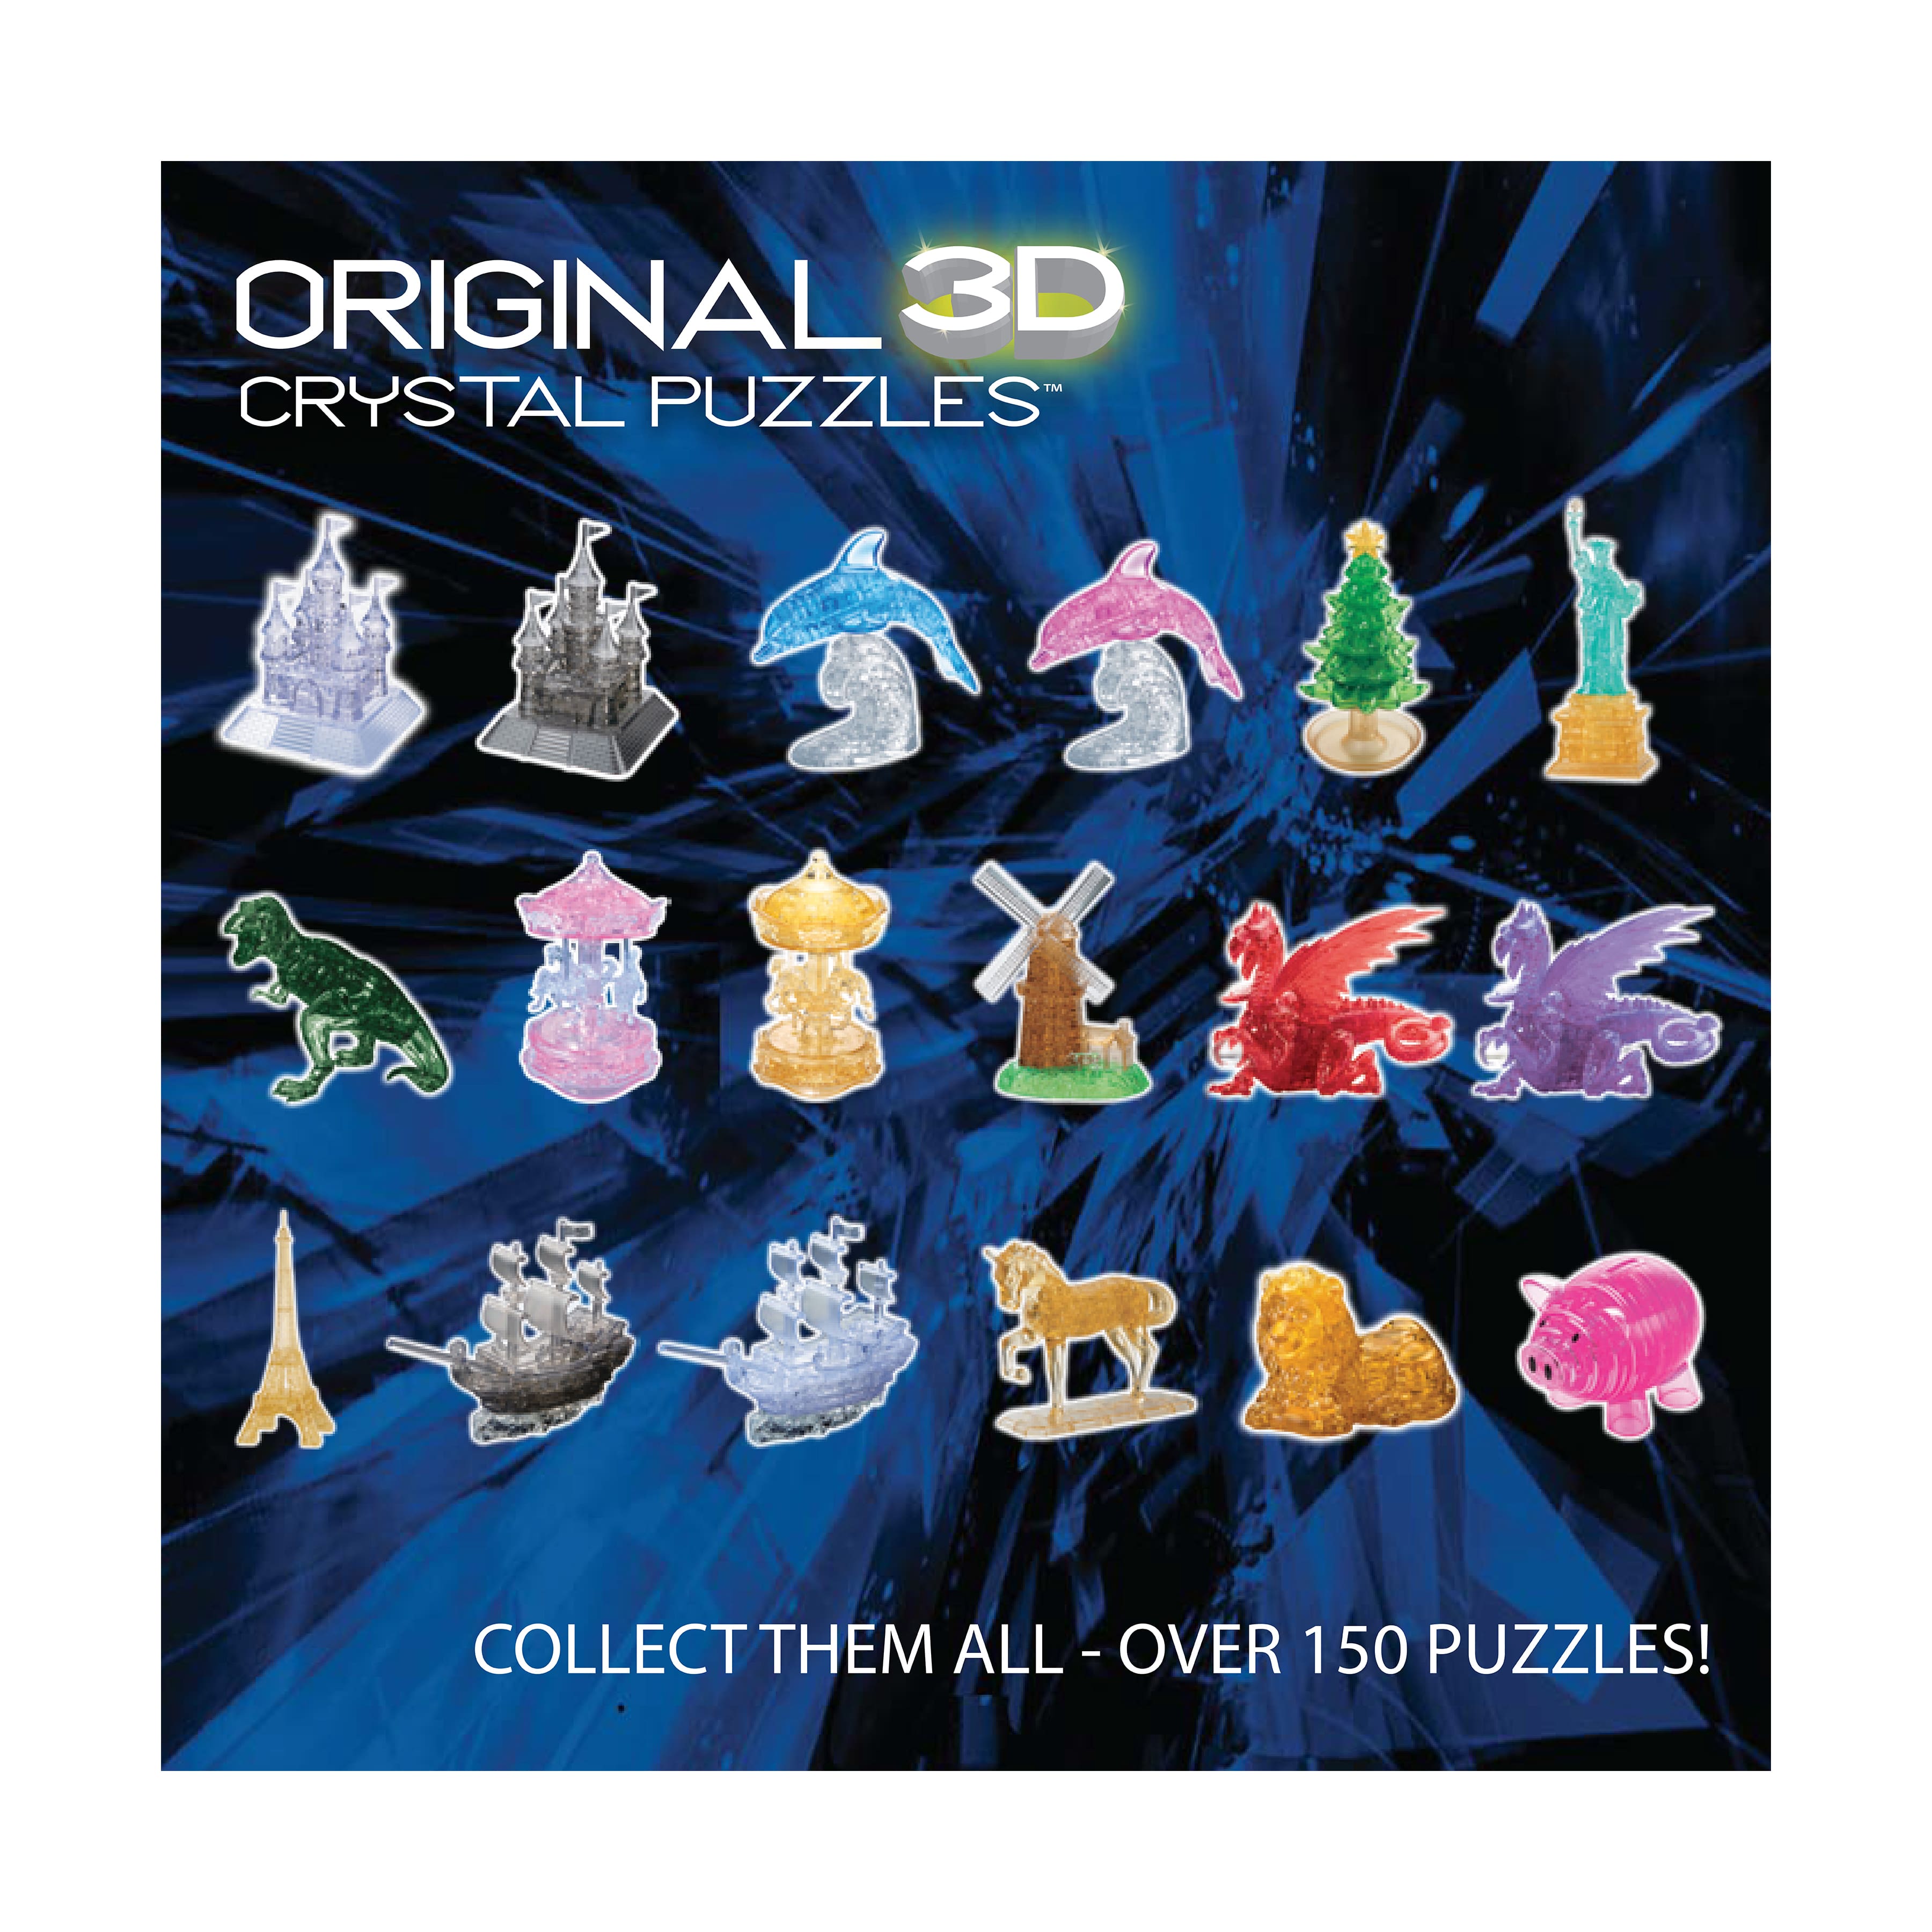 3D Crystal Puzzle - Disney Cinderella&#x27;s Castle (Pink): 71 Pcs